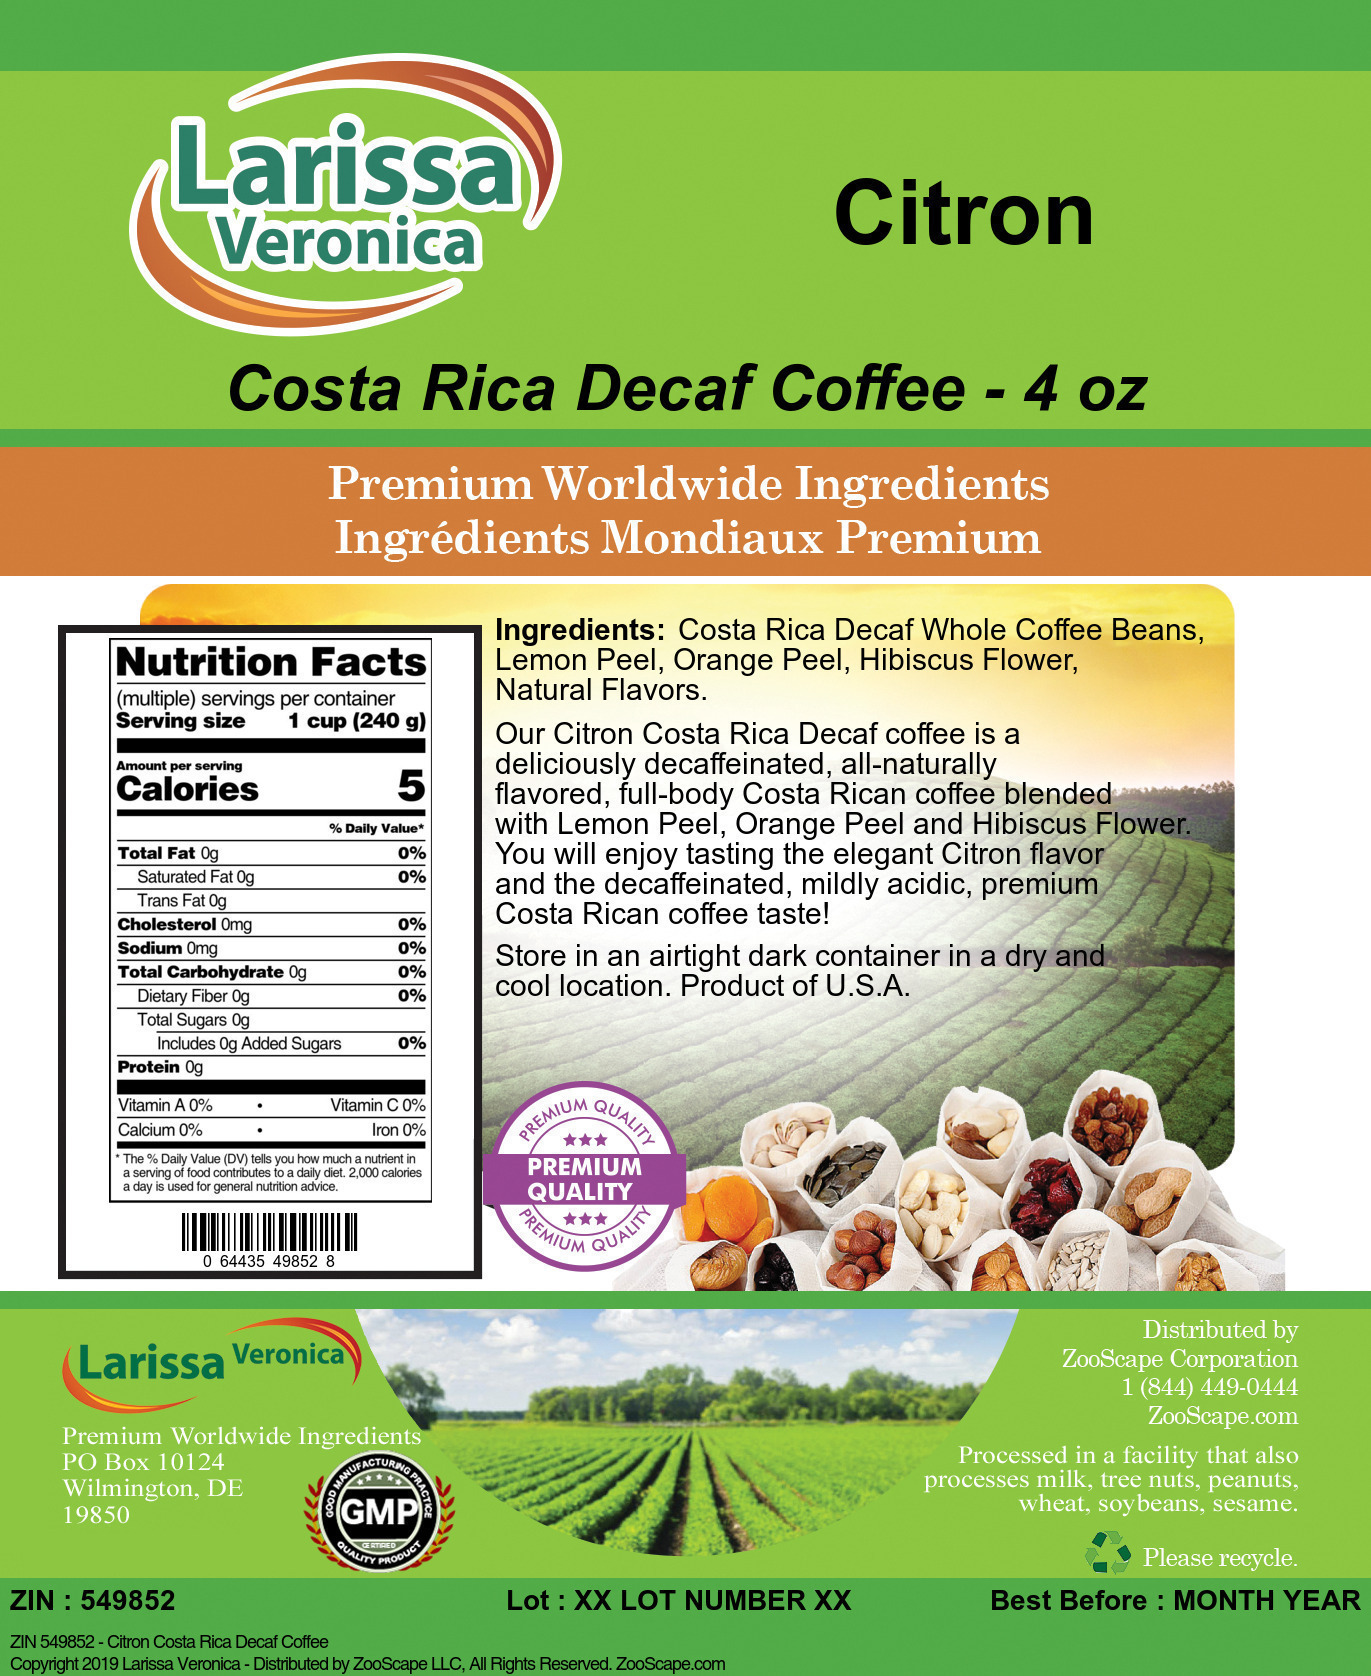 Citron Costa Rica Decaf Coffee - Label